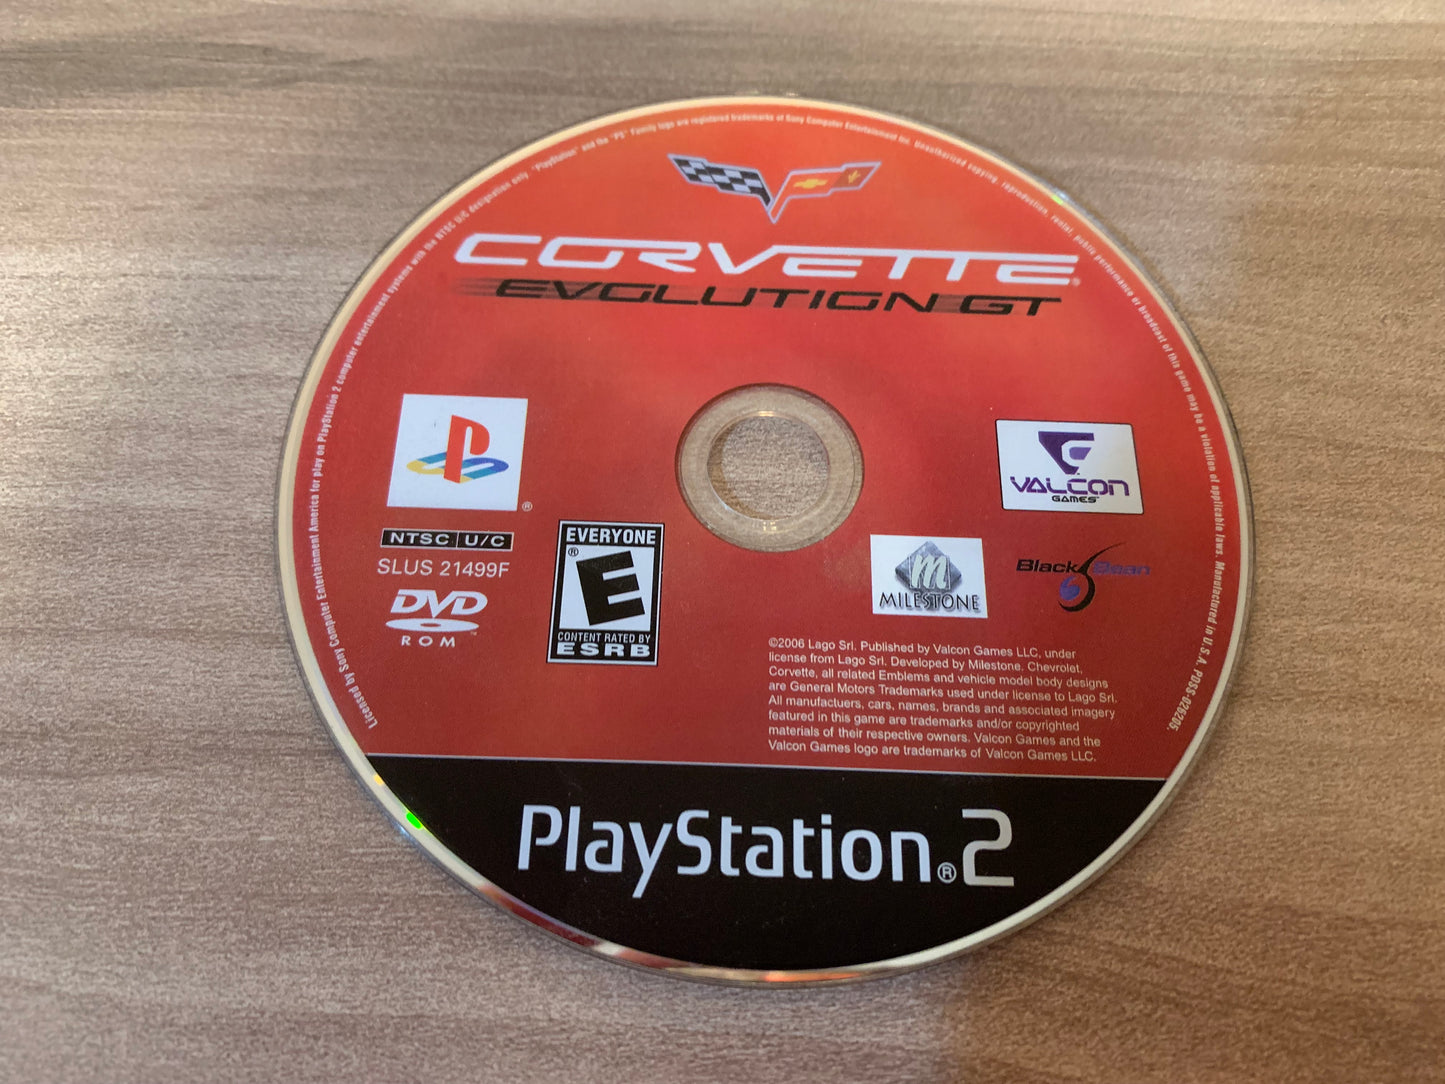 SONY PLAYSTATiON 2 [PS2] | CORVETTE EVOLUTiON GT